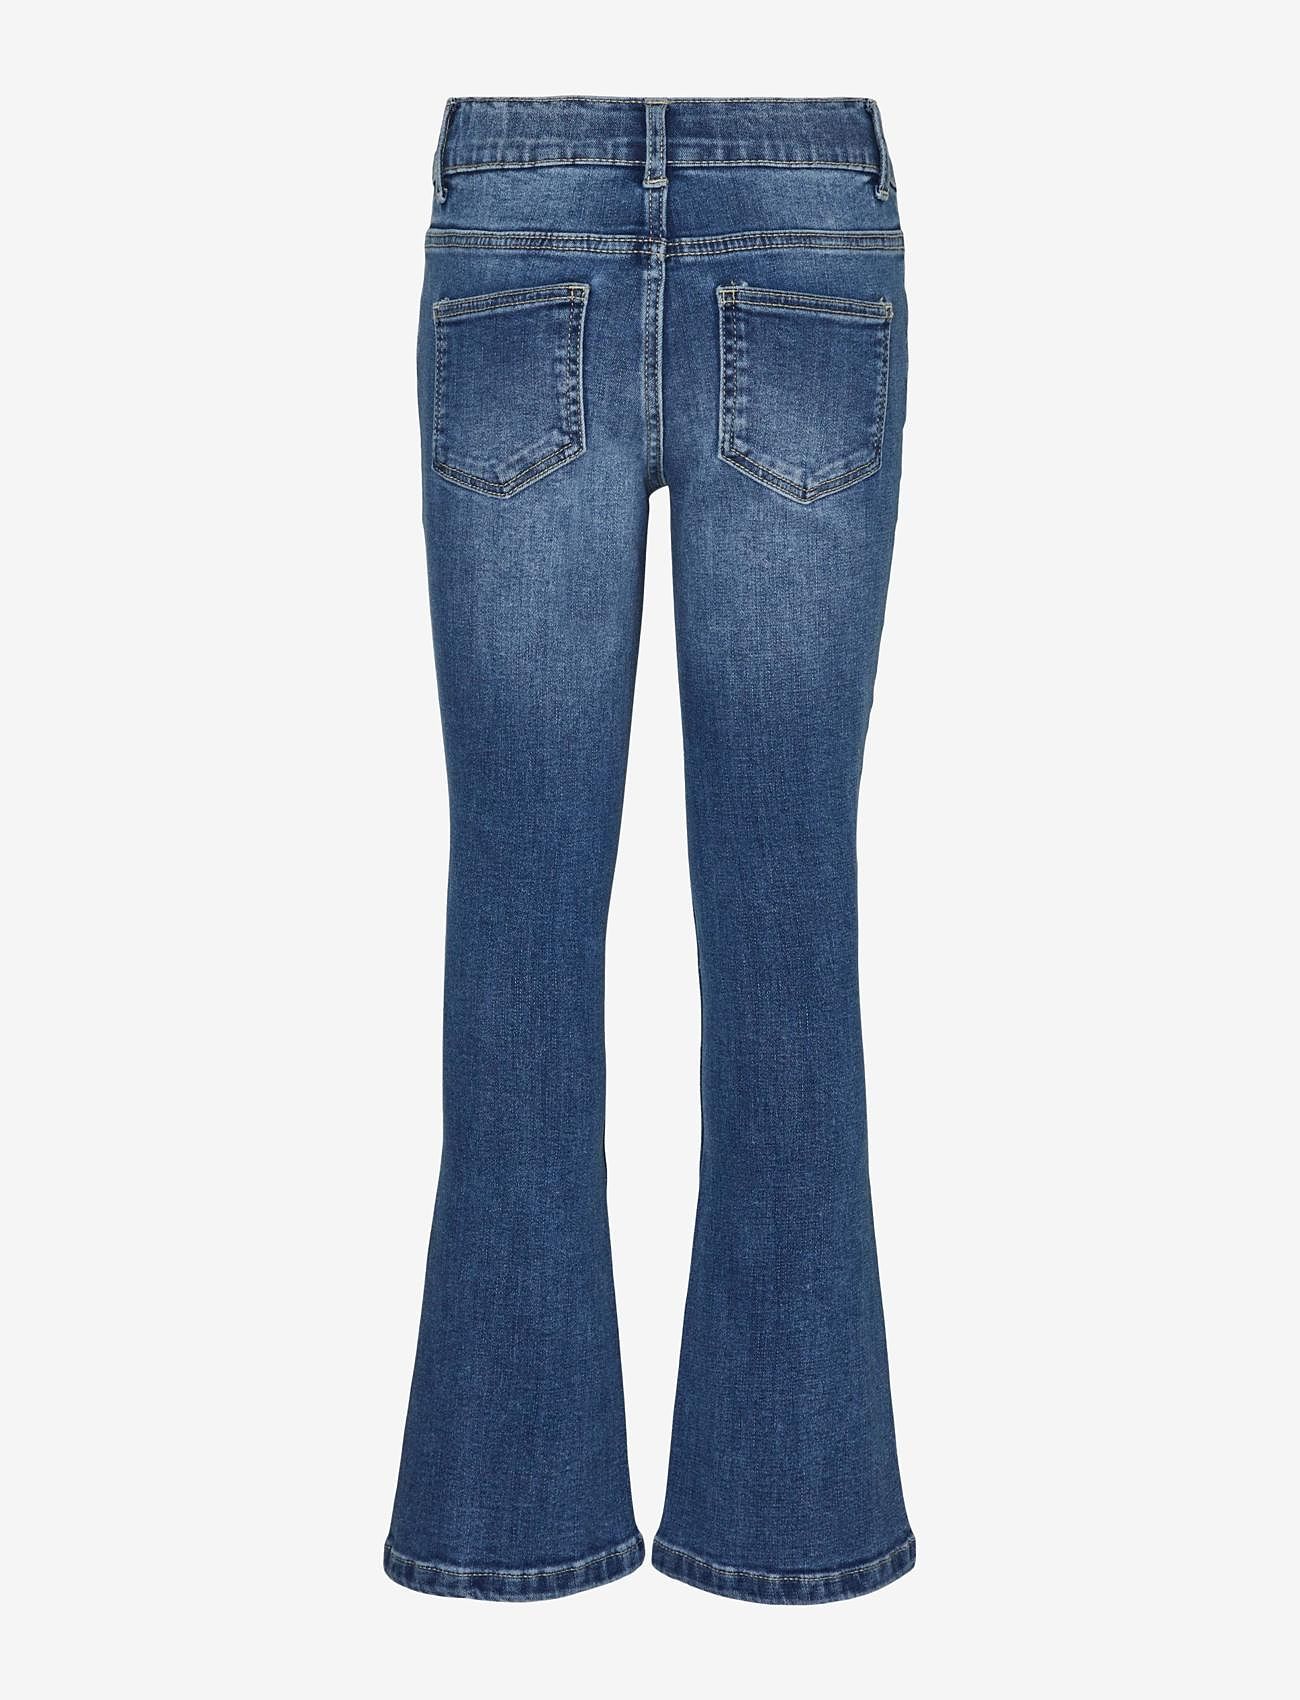 Vero Moda Girl - VMRIVER FLAR DNM JNS VI3336 GA GIRL NOOS - bootcut jeans - medium blue denim - 1